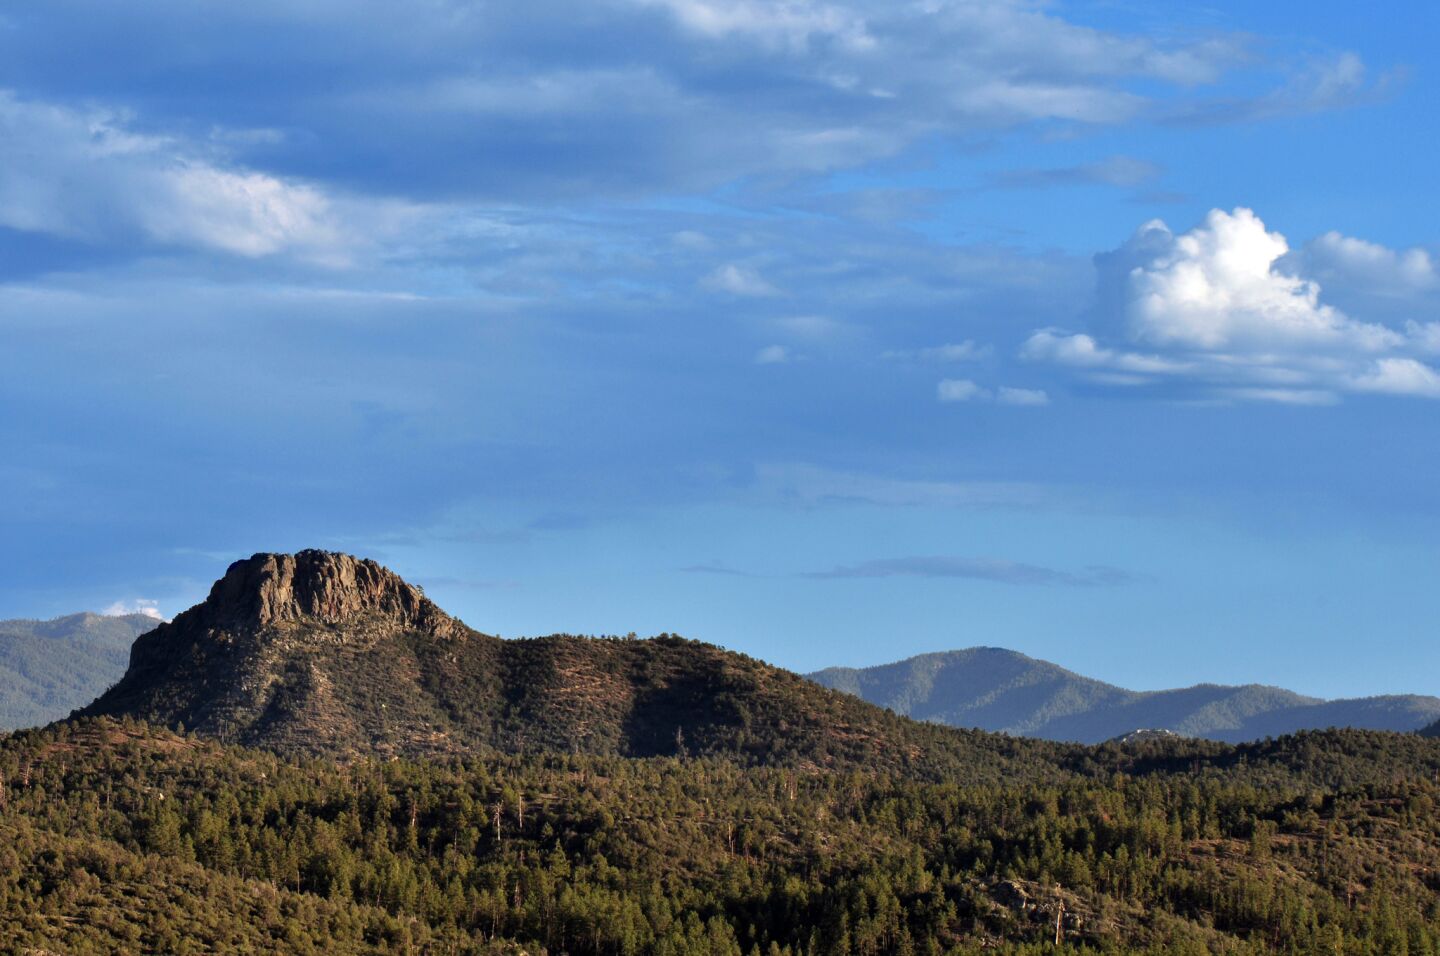 Thumb Butte in Prescott, Ariz., offers a commanding view of the region.